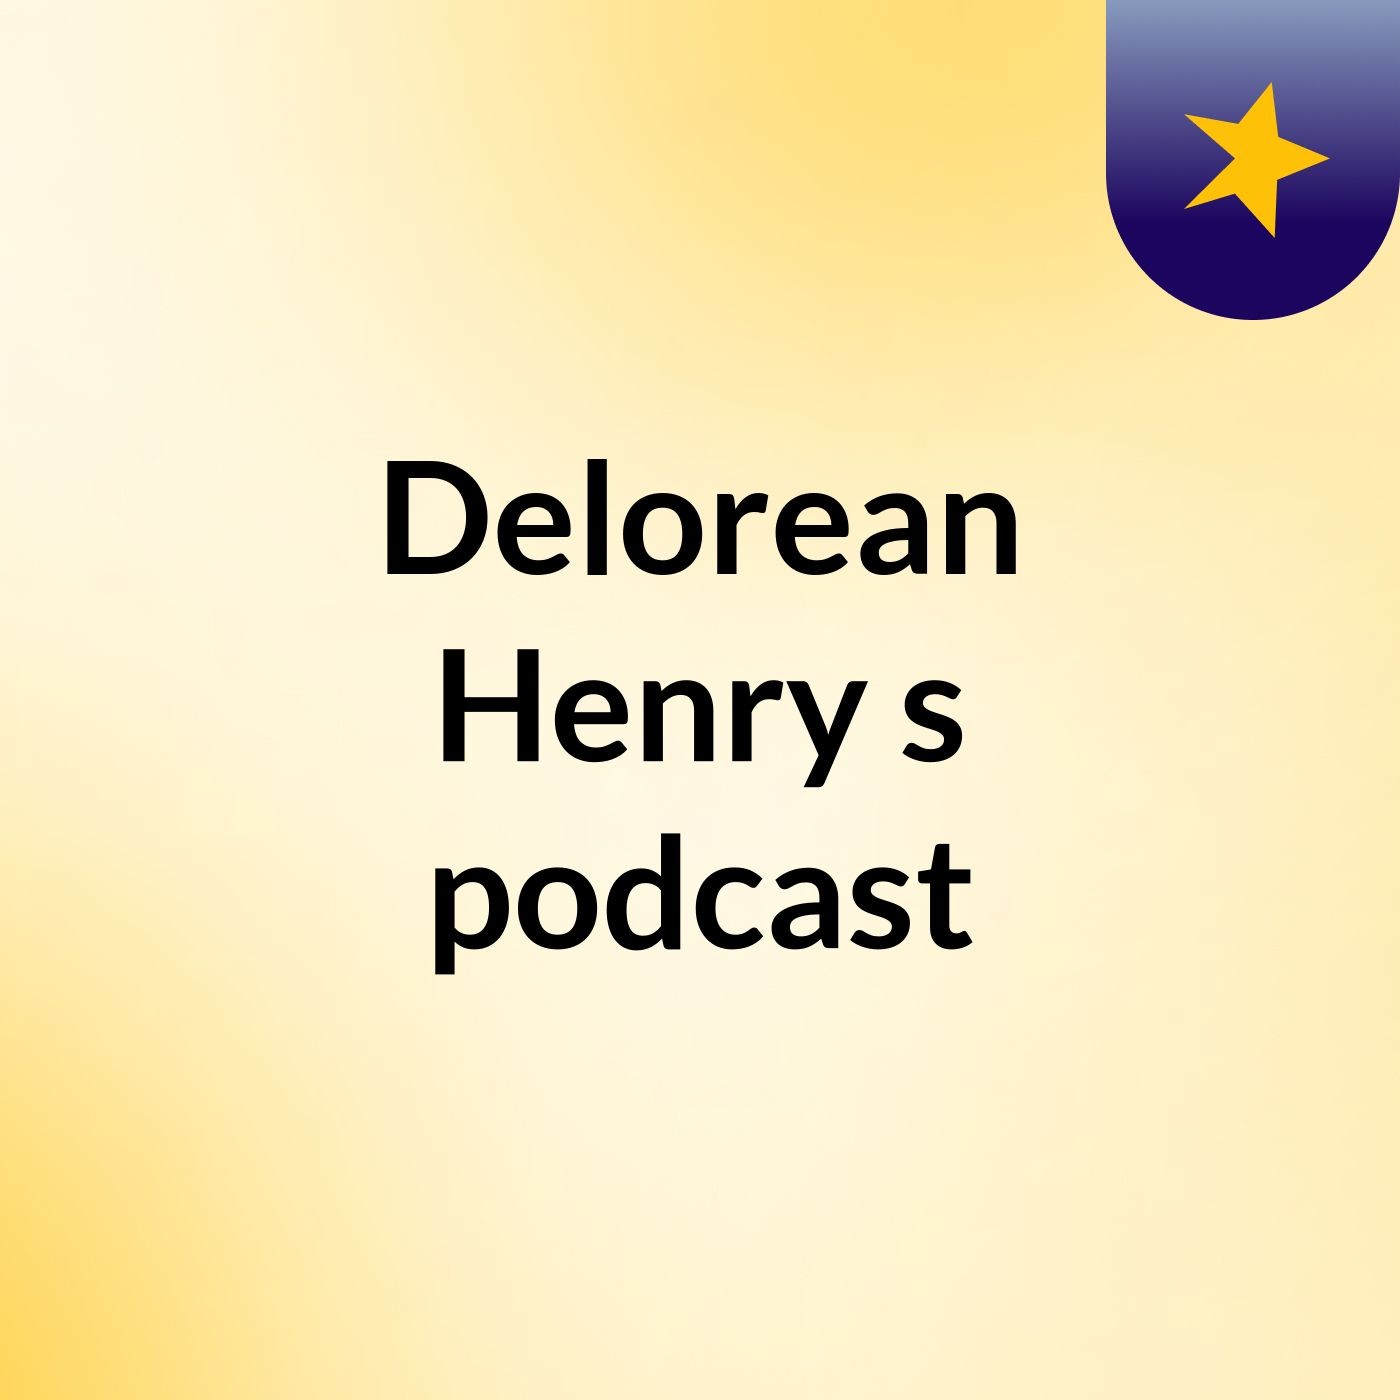 Delorean Henry's podcast